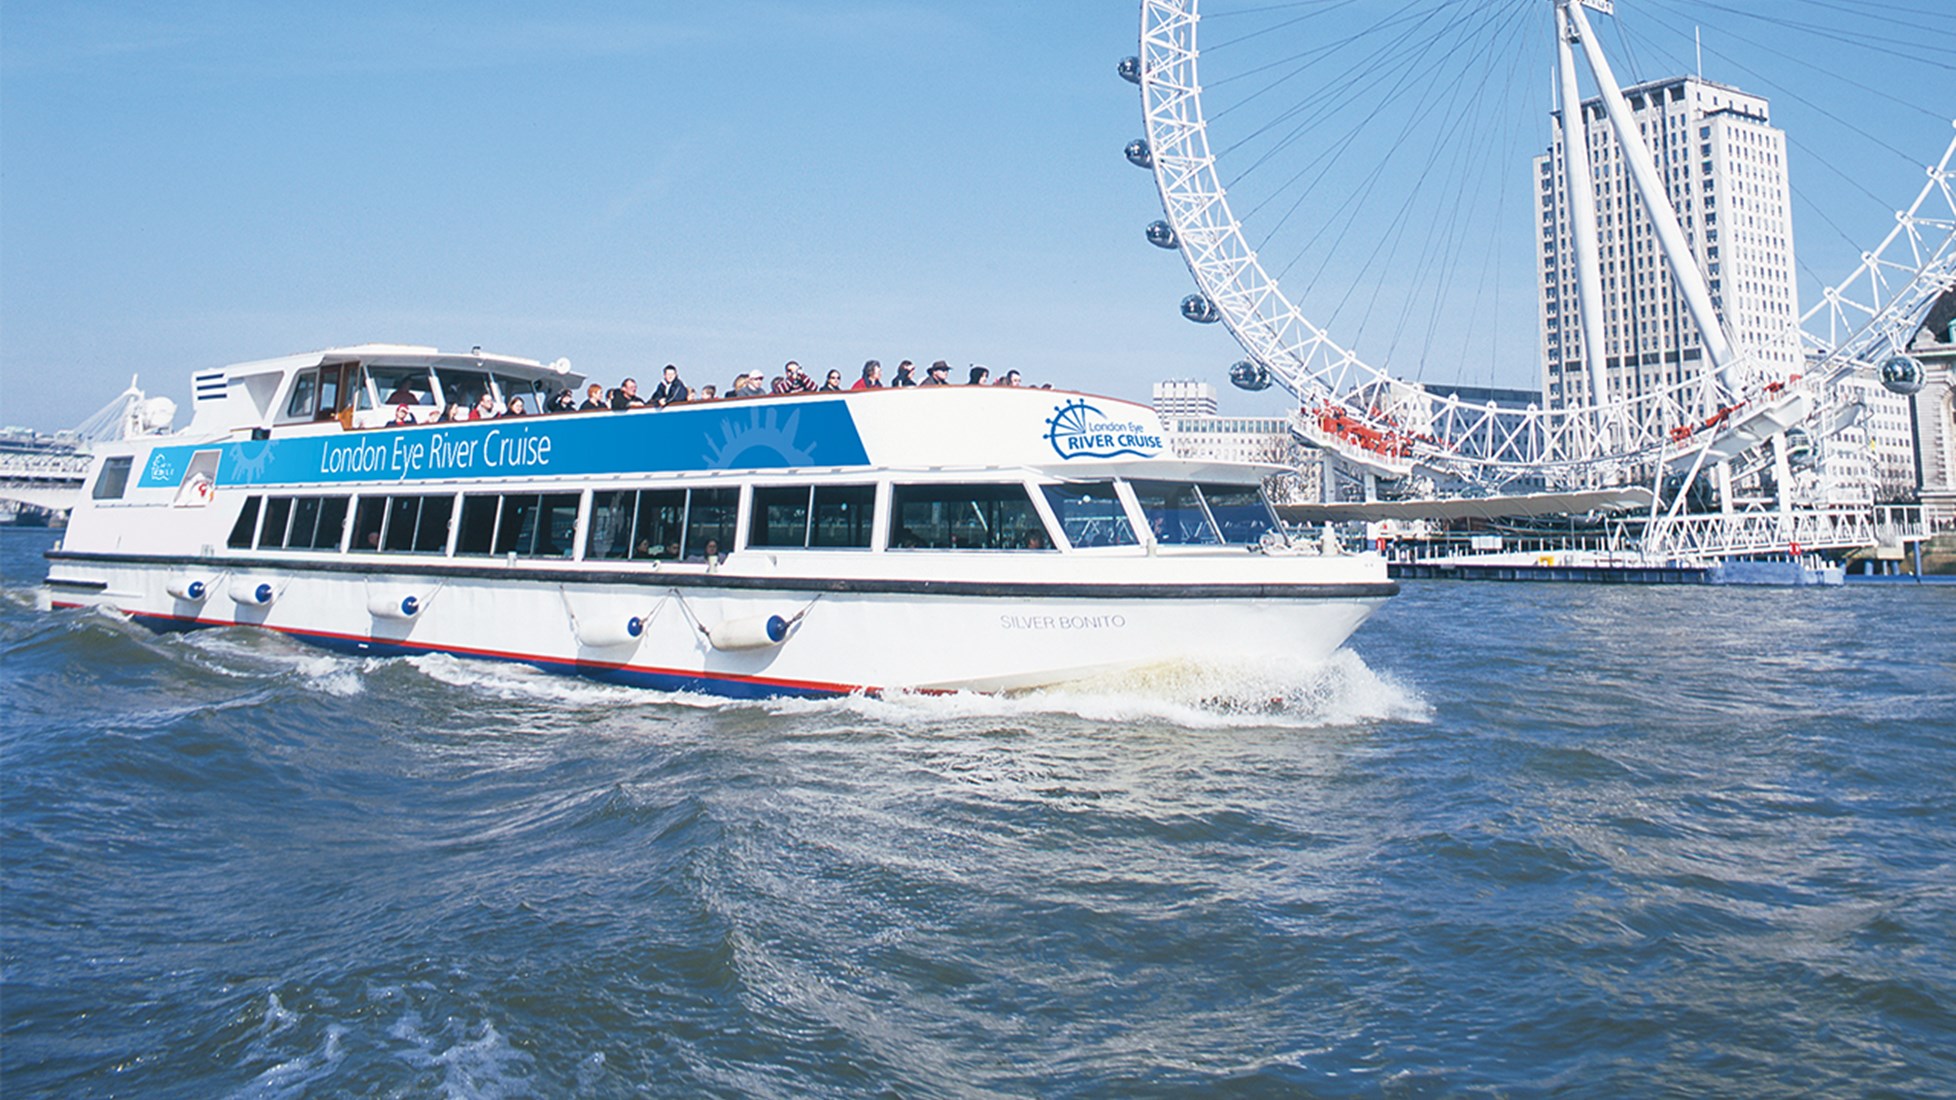 London Eye River Cruise Tickets, River Boat Cruise London